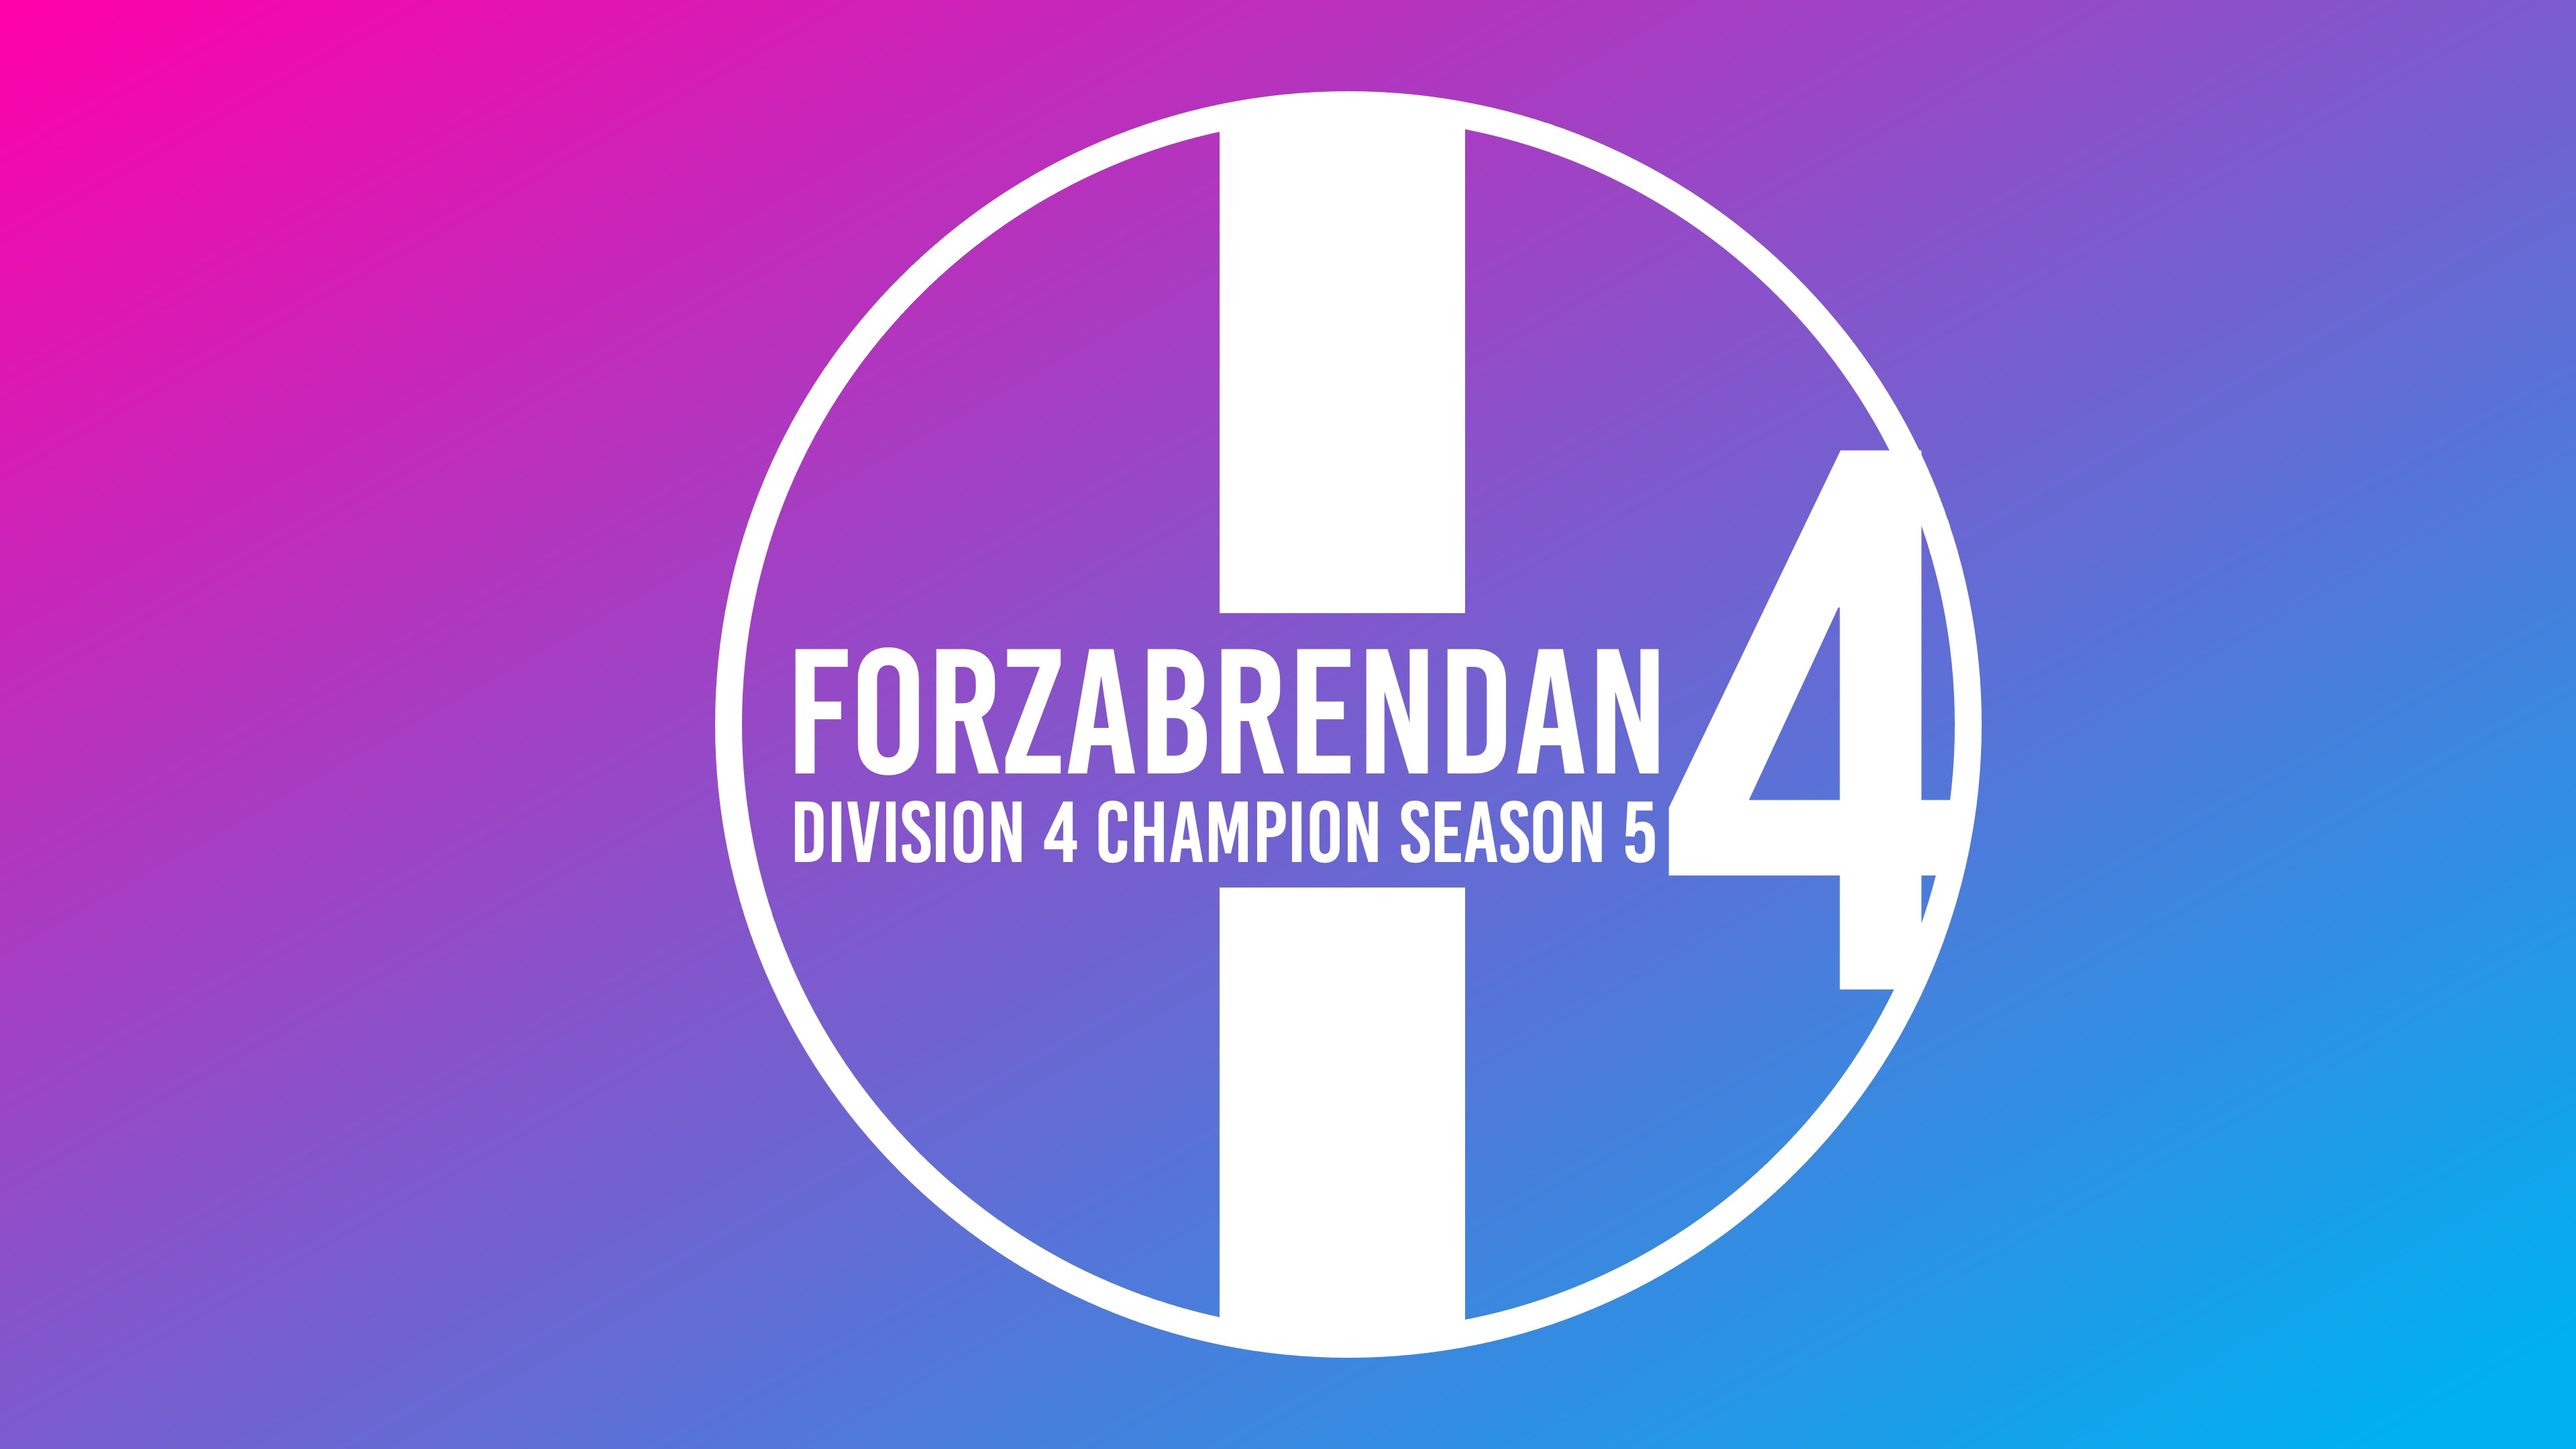 Division 4 Champion - ForzaBrendan